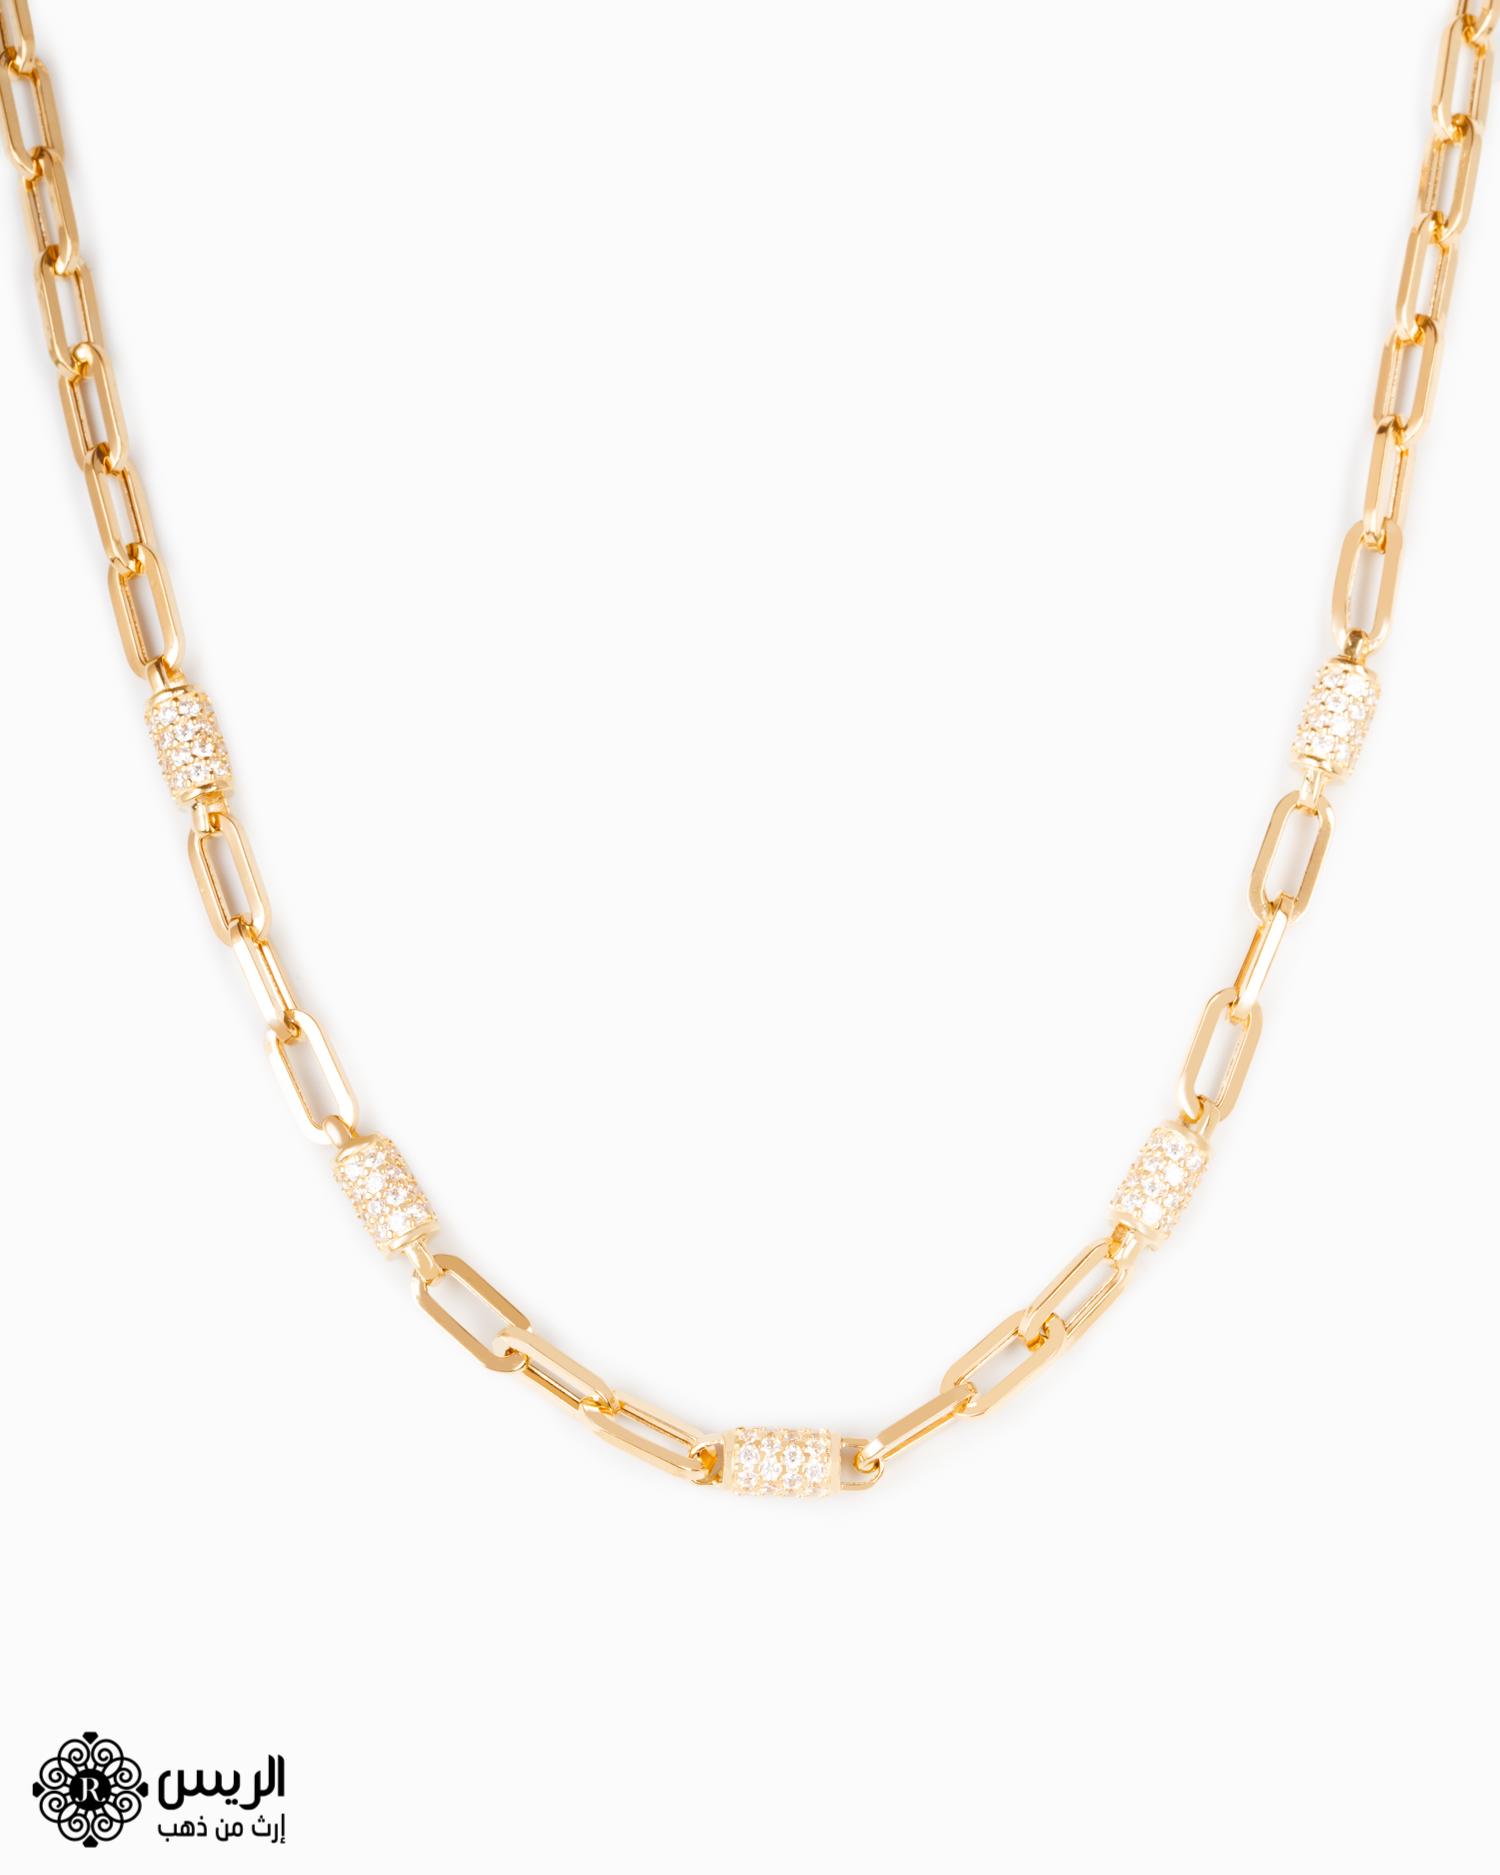 Raies jewelry chain necklace عقد جنزير الريس للمجوهرات